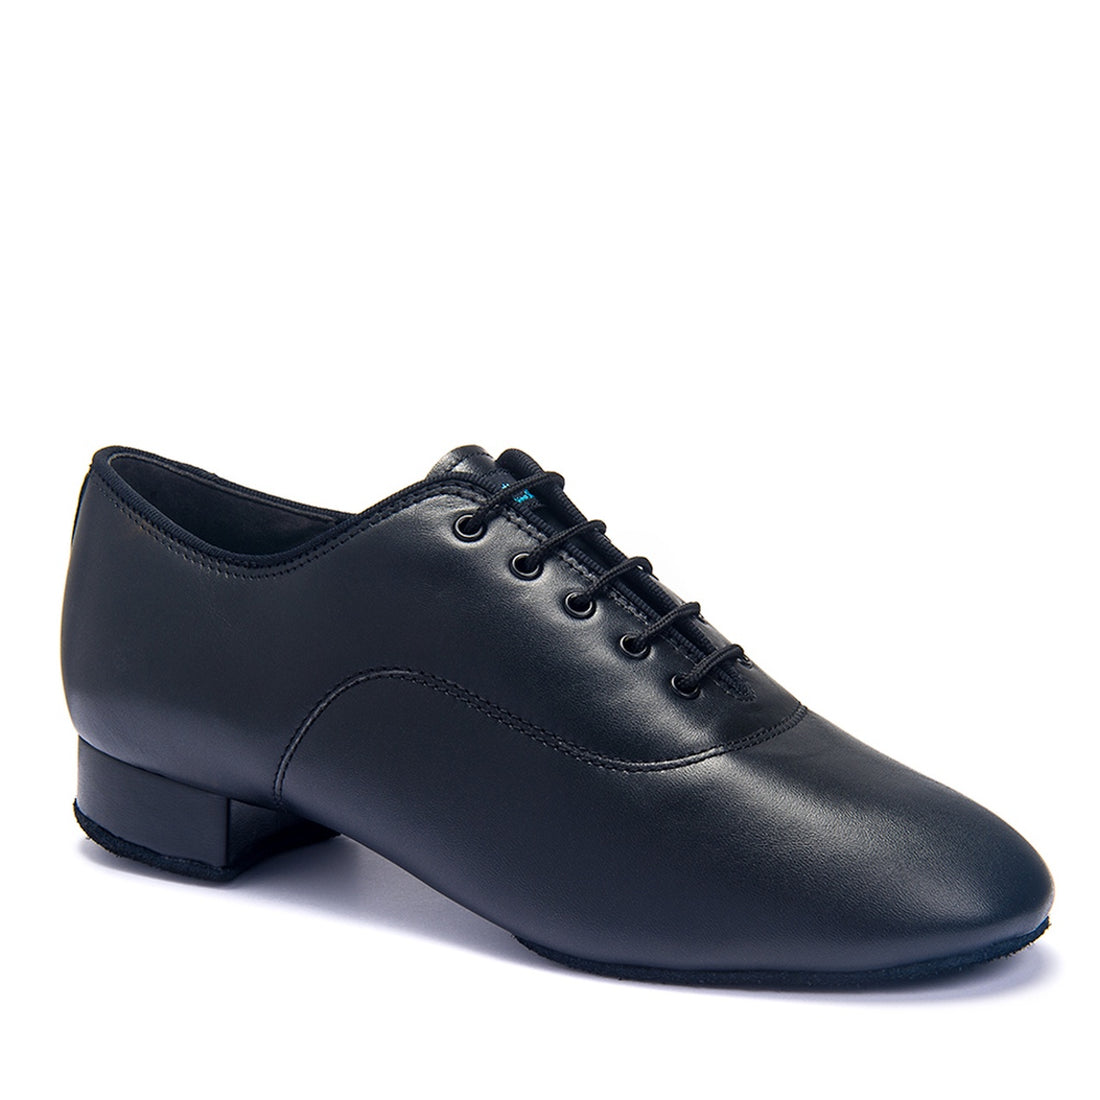 International Dance Shoes Contra - Black Calf